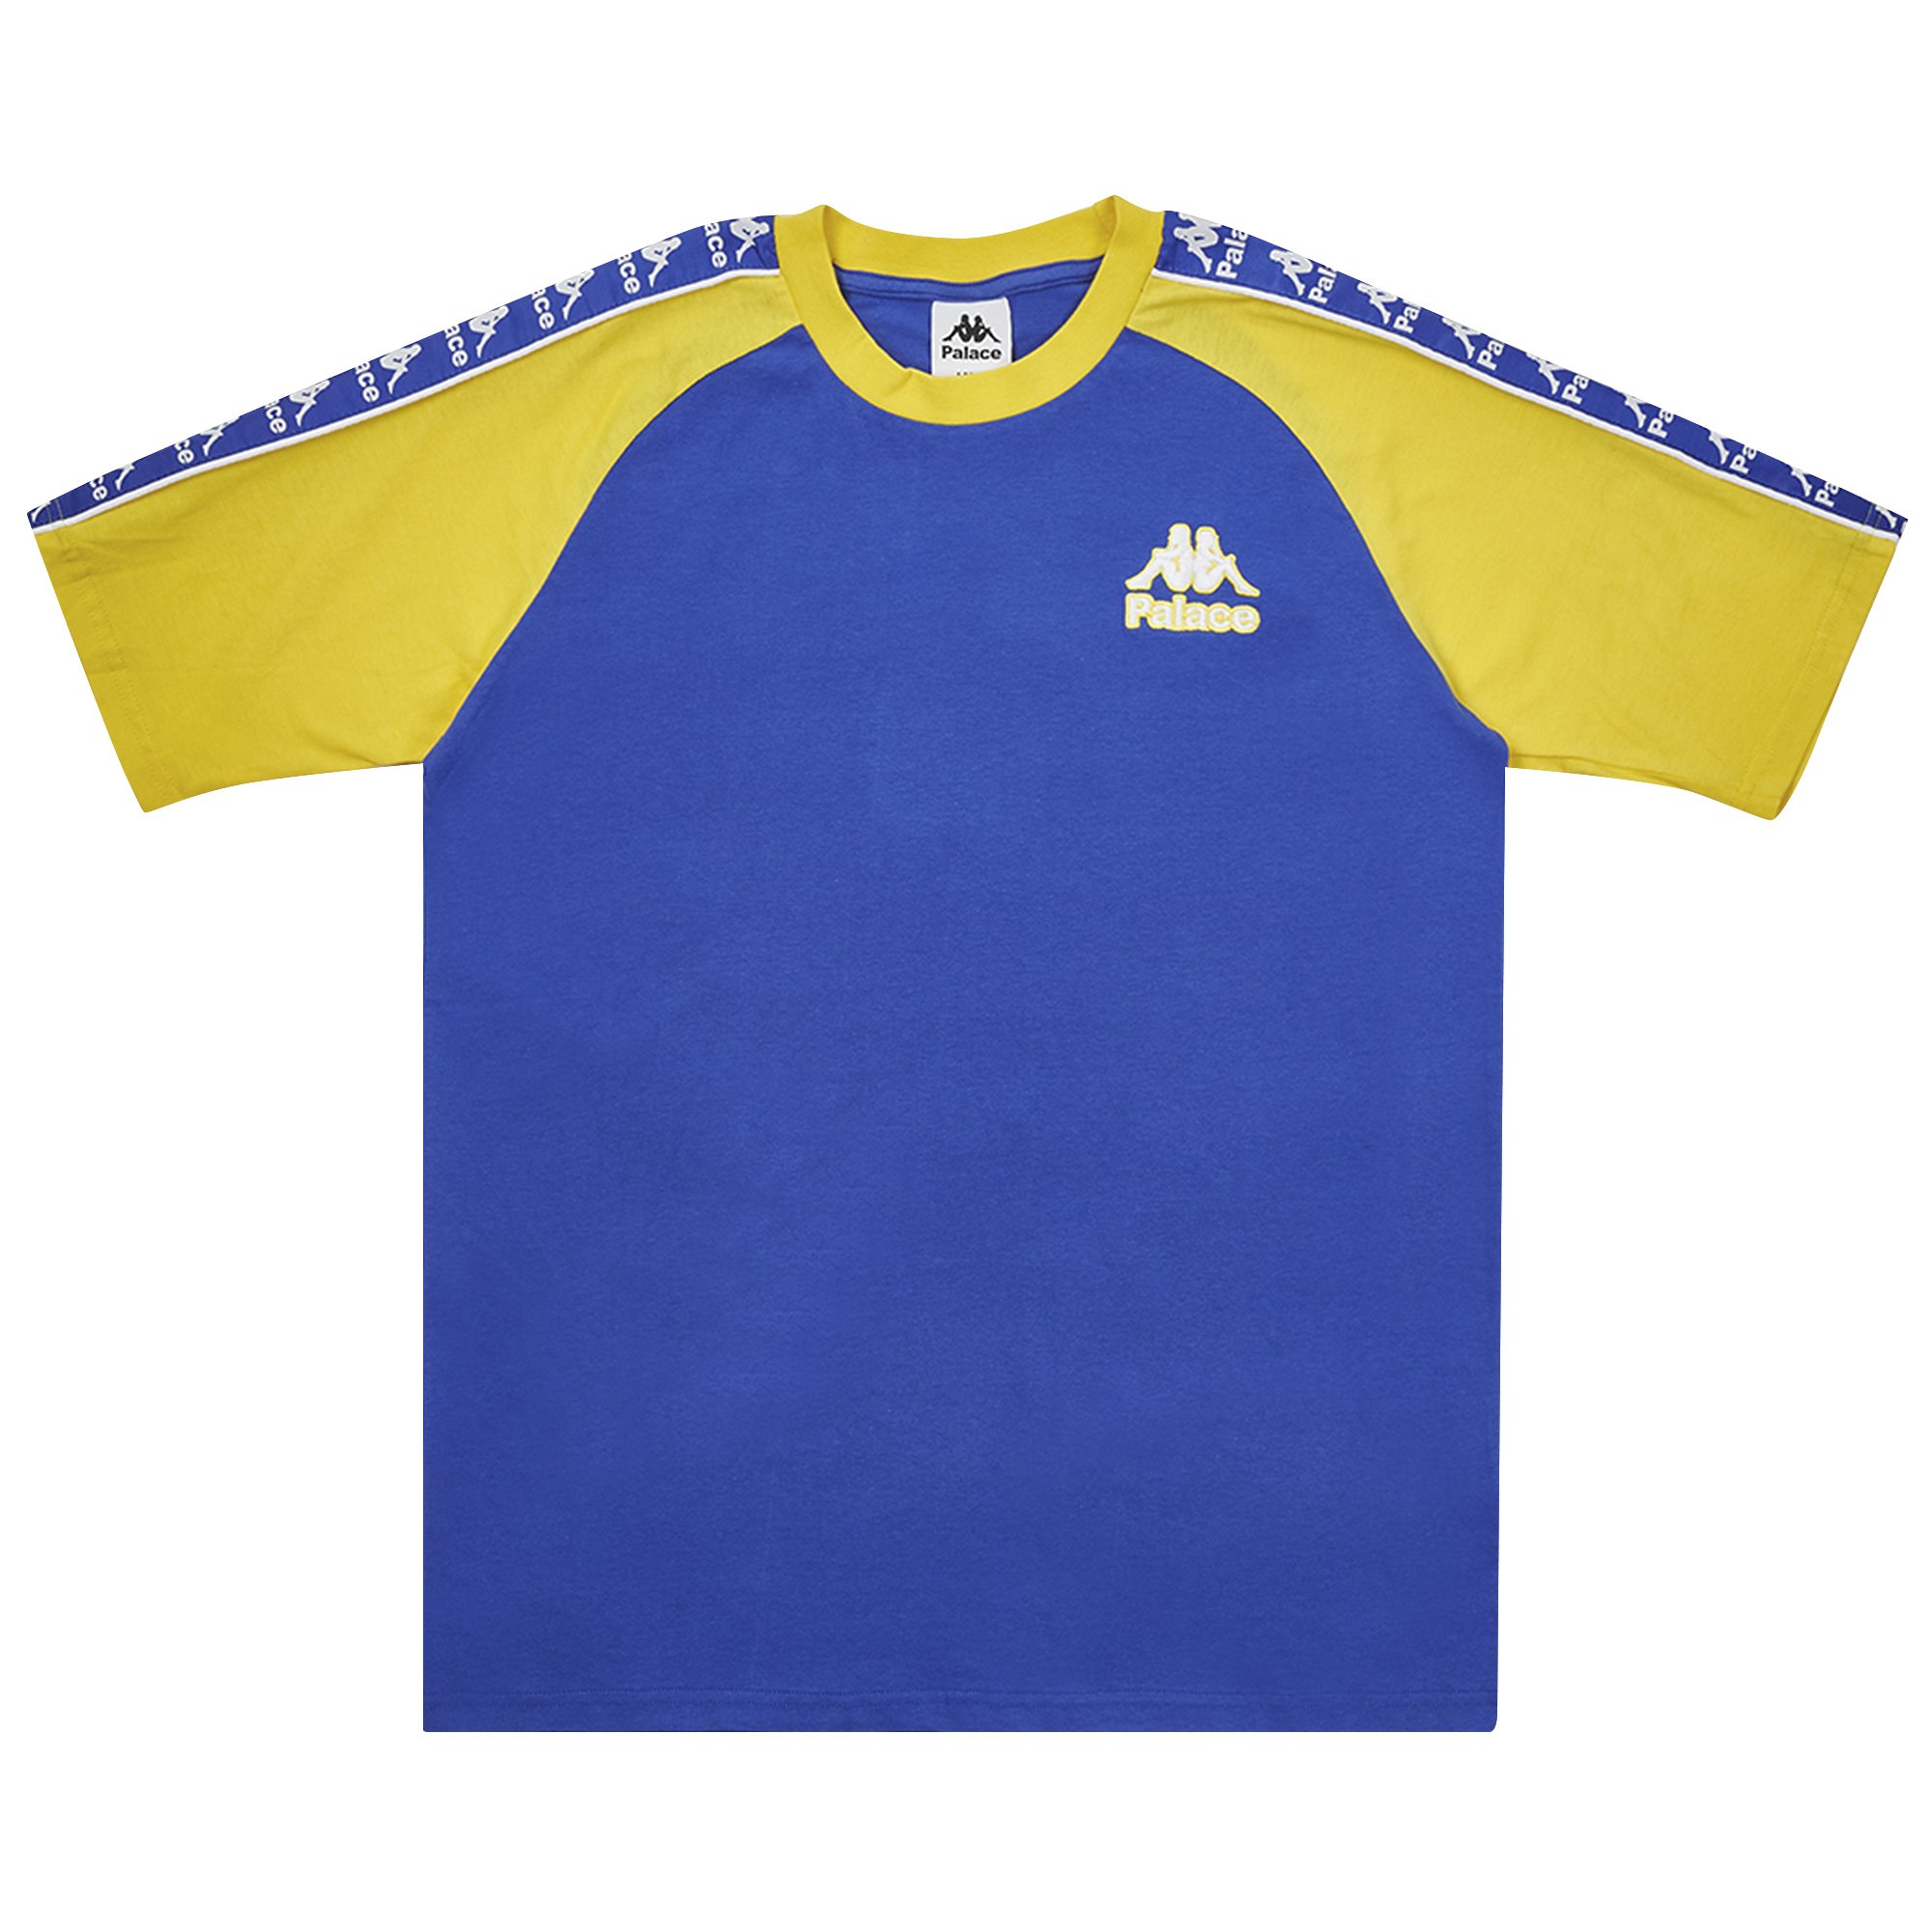 Palace x Kappa Classic Raglan T-Shirt 'Blue/Yellow'